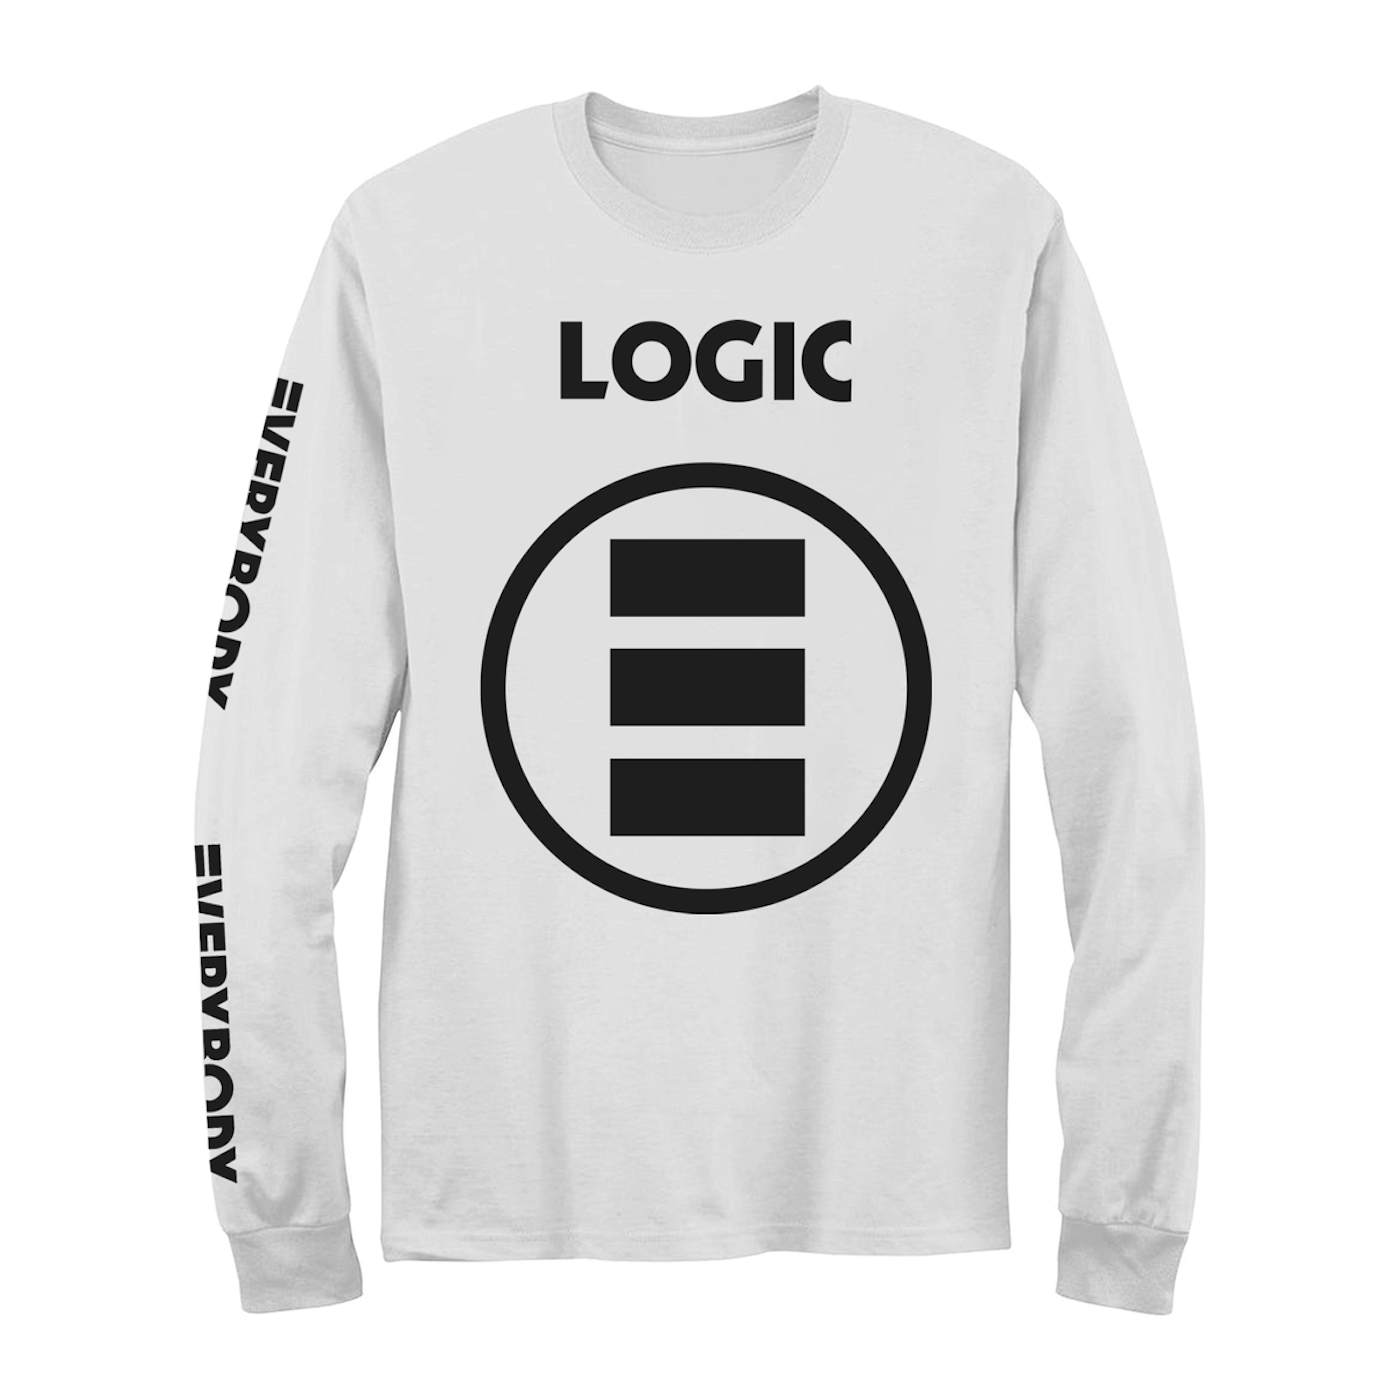 Logic Long Sleeve Shirt | E Button Logo Logic Long Sleeve Shirt